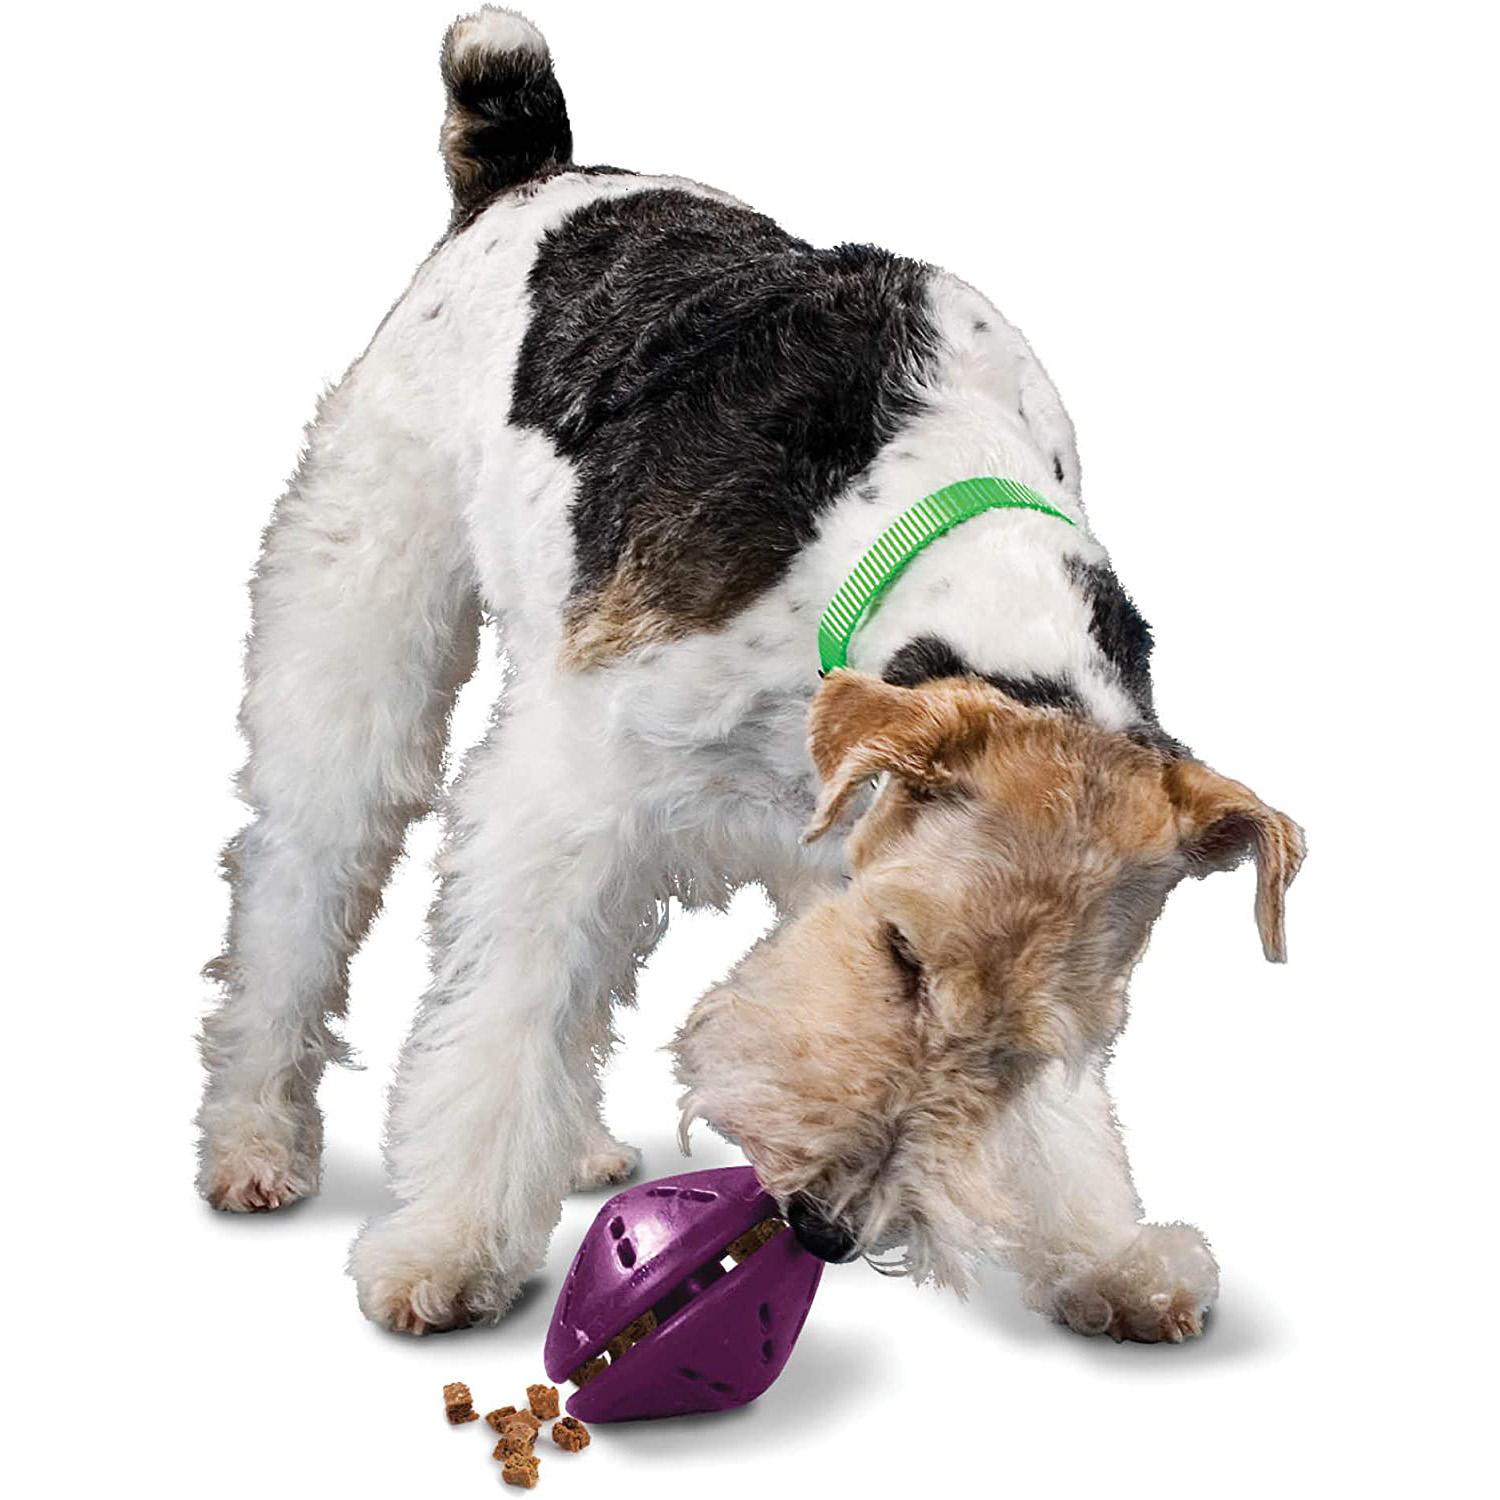 PetSafe Busy Buddy Twist n Treat Dispensing Dog Toy for $6.95